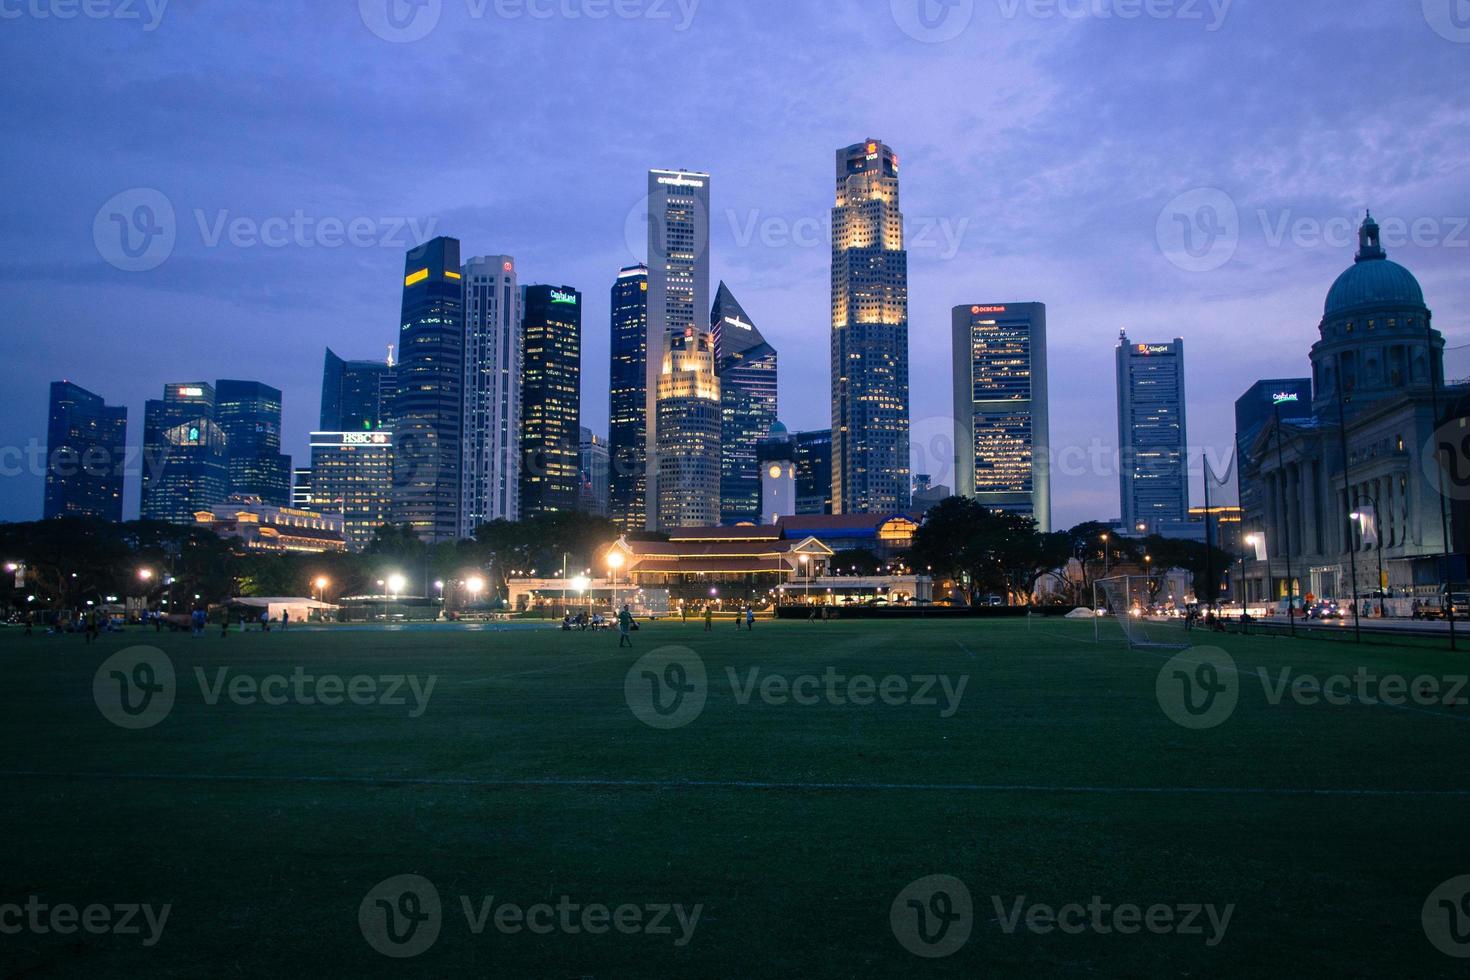 skyline de cingapura foto